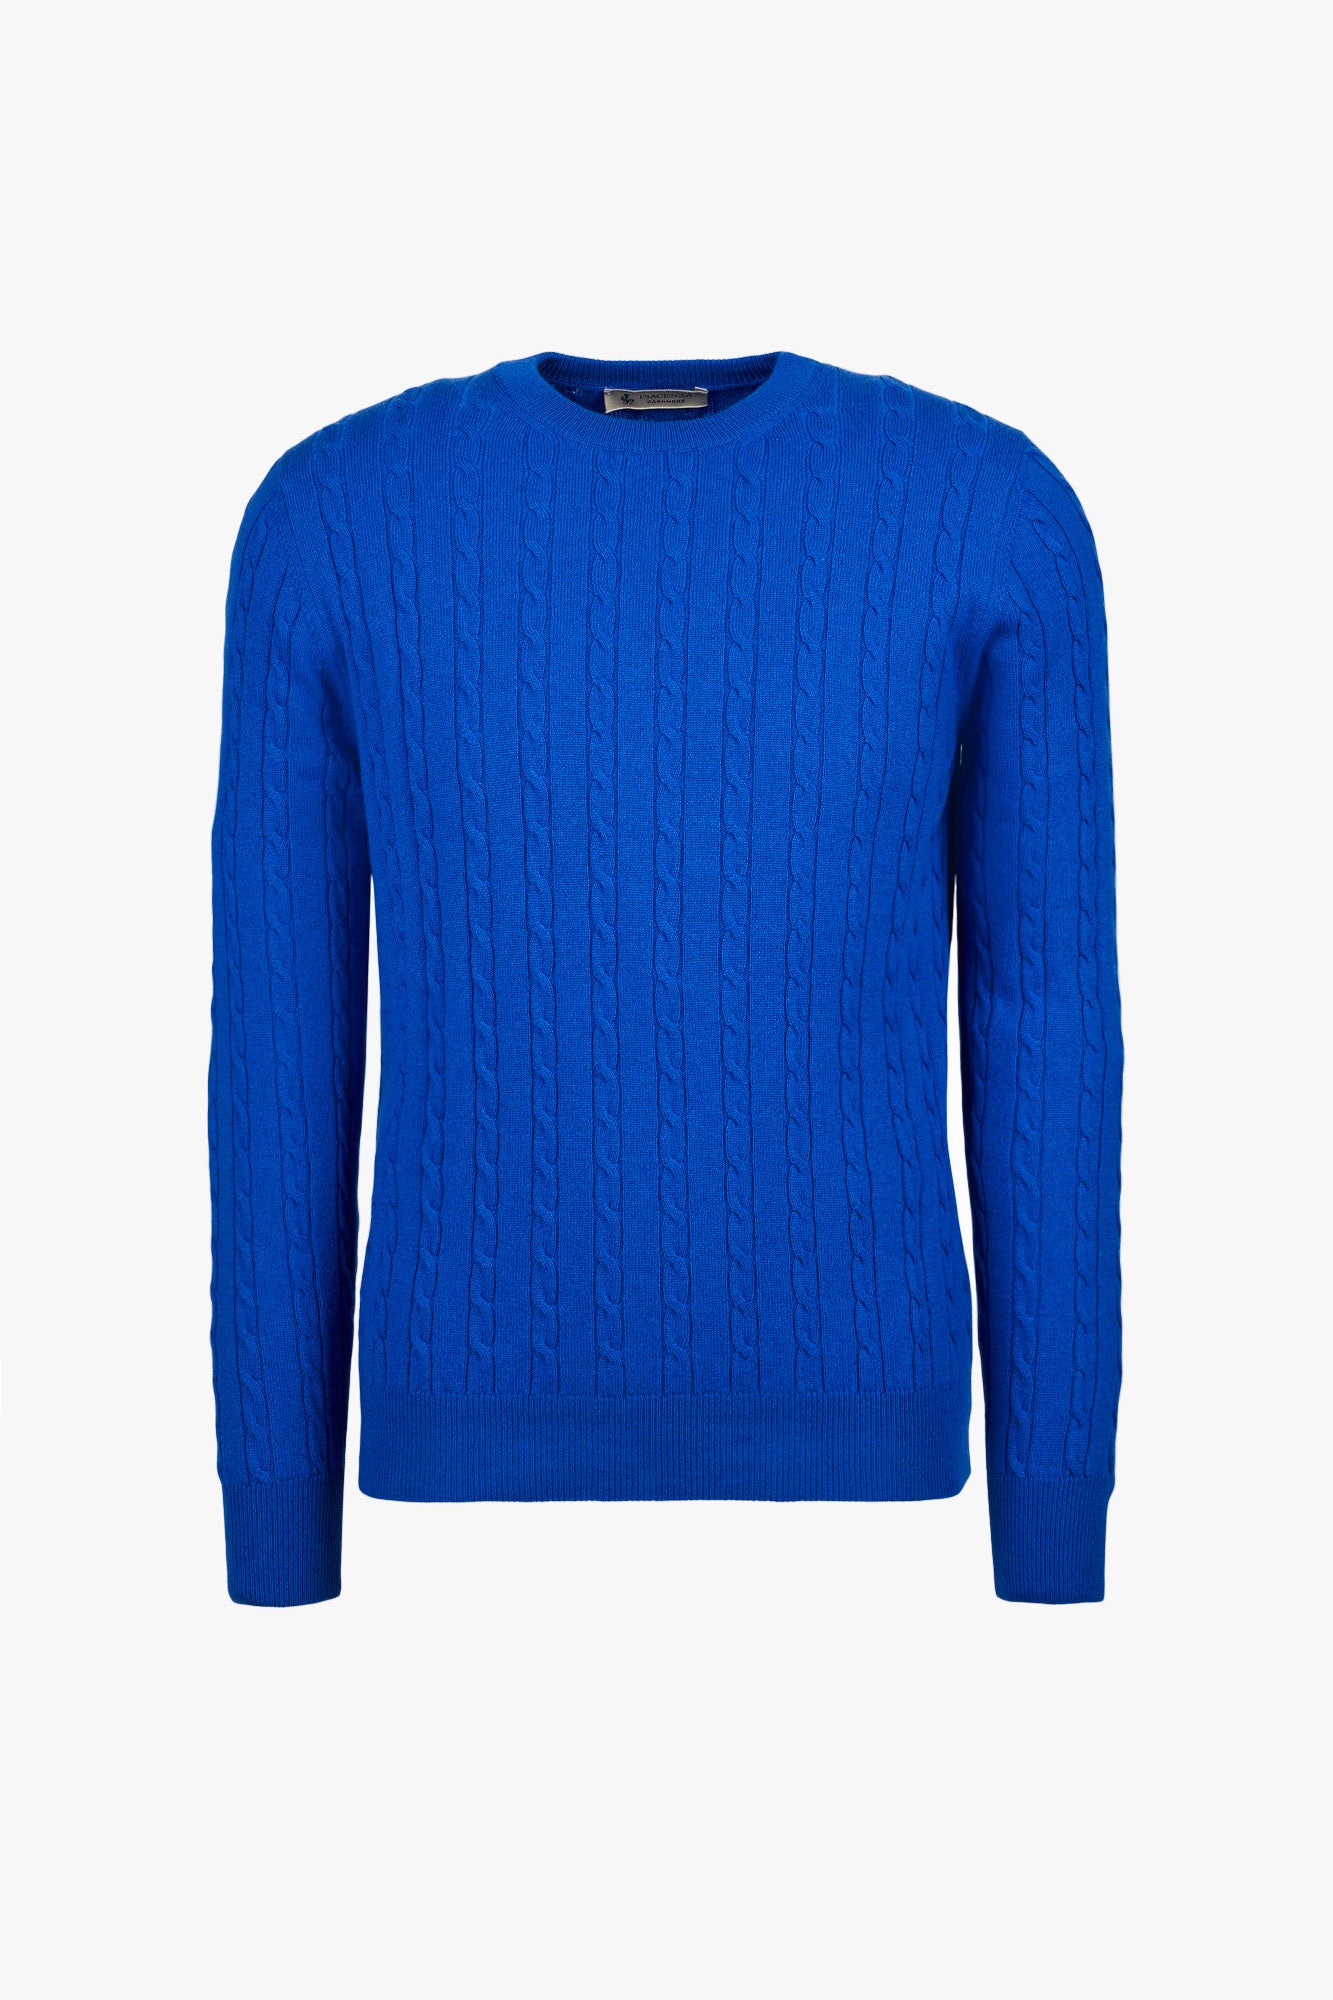 Bright blue ribbed crewneck sweater